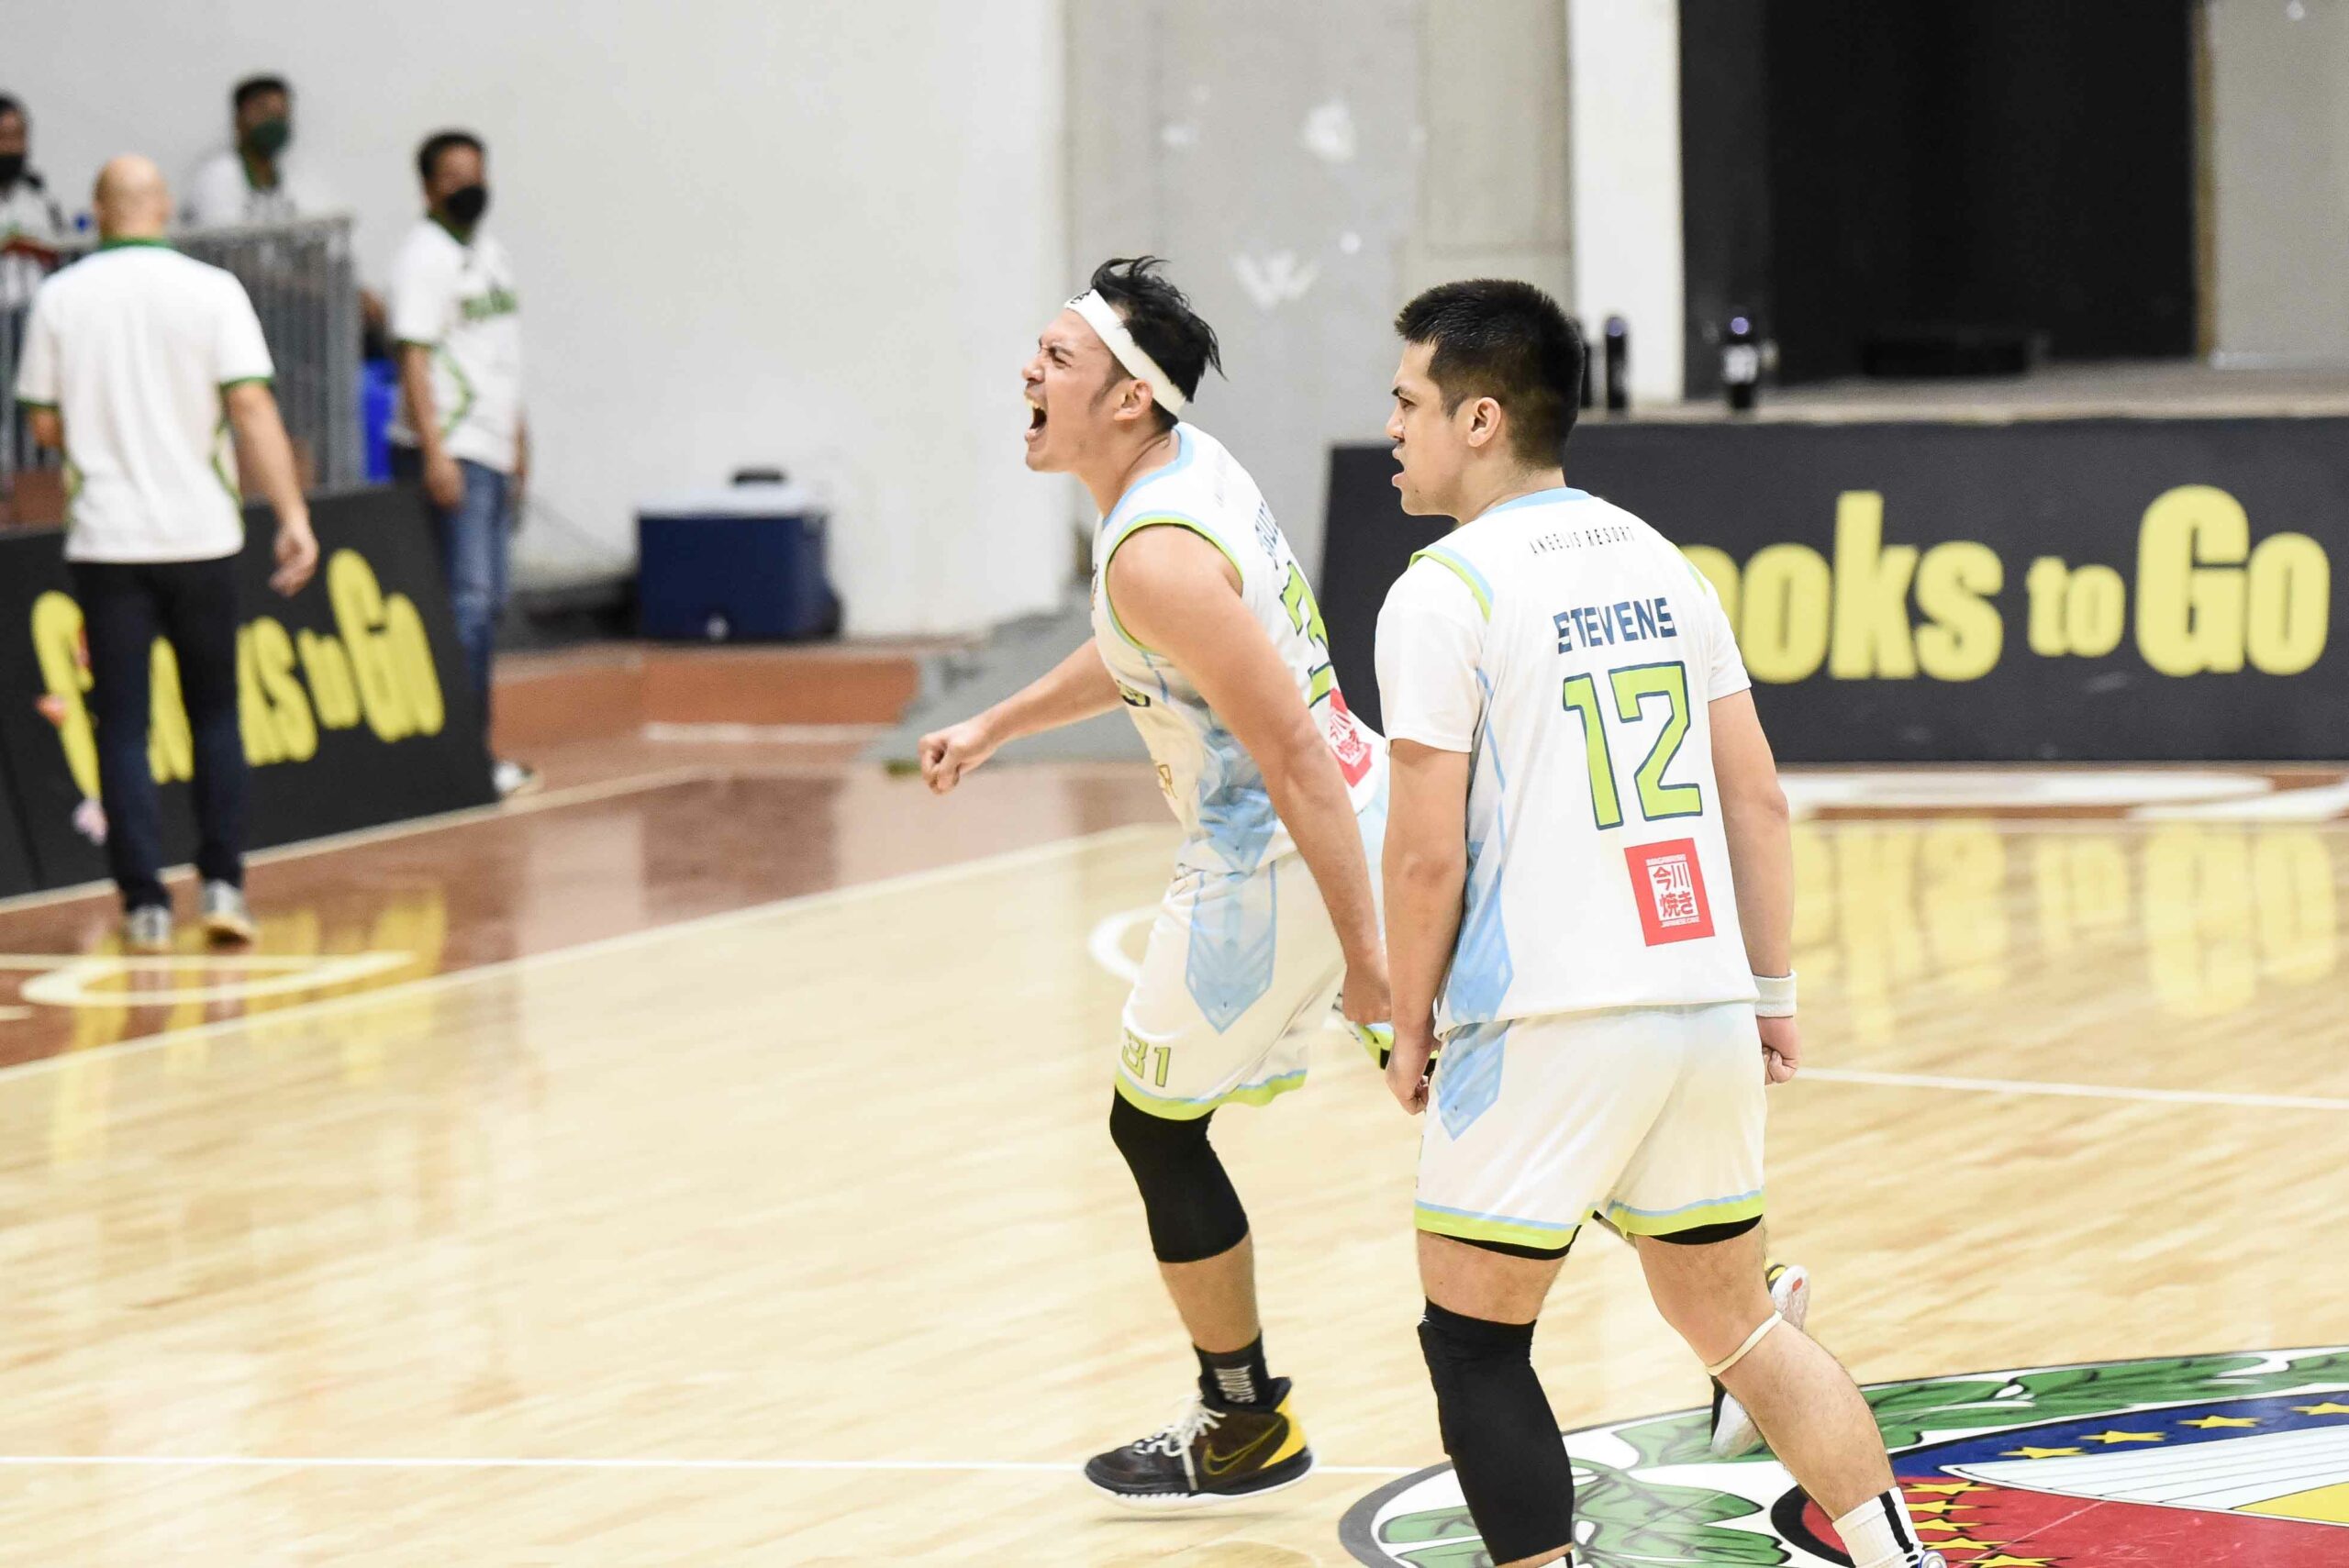 2021-Chooks-NBL-Muntinlupa-vs-Paranaque-Ebrahim-Enguio-Muntinlupa-scaled Arias steps up for Mendoza, helps Muntinlupa reach NBL semis Basketball NBL News  - philippine sports news